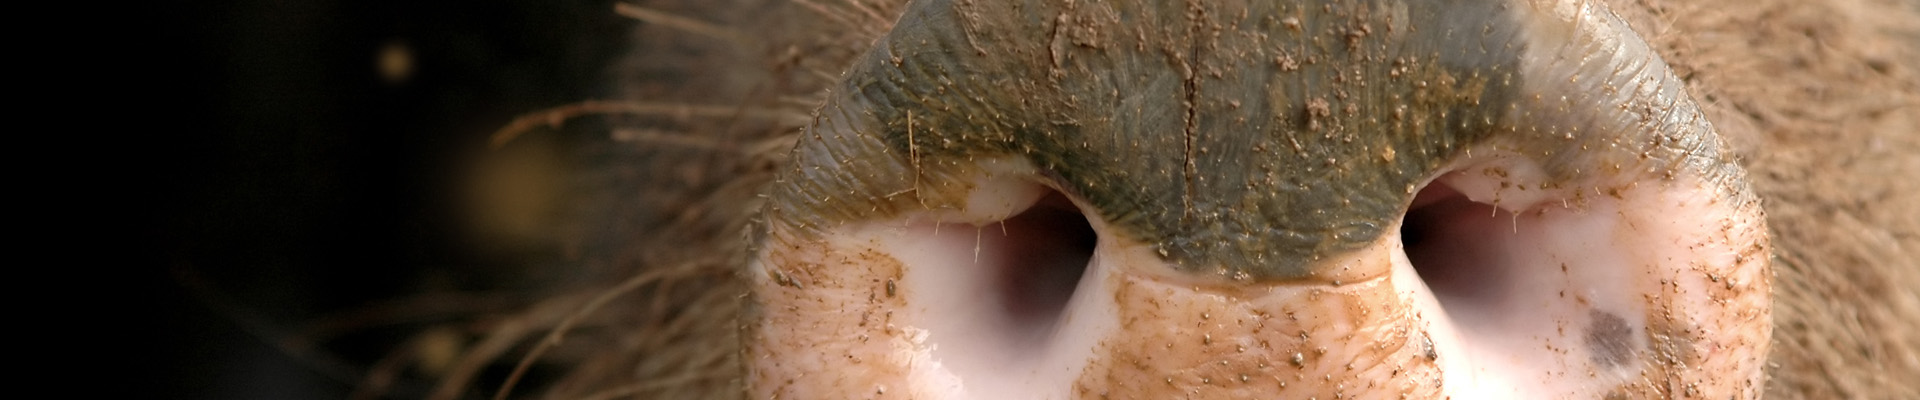 Close up of a pigs nose 